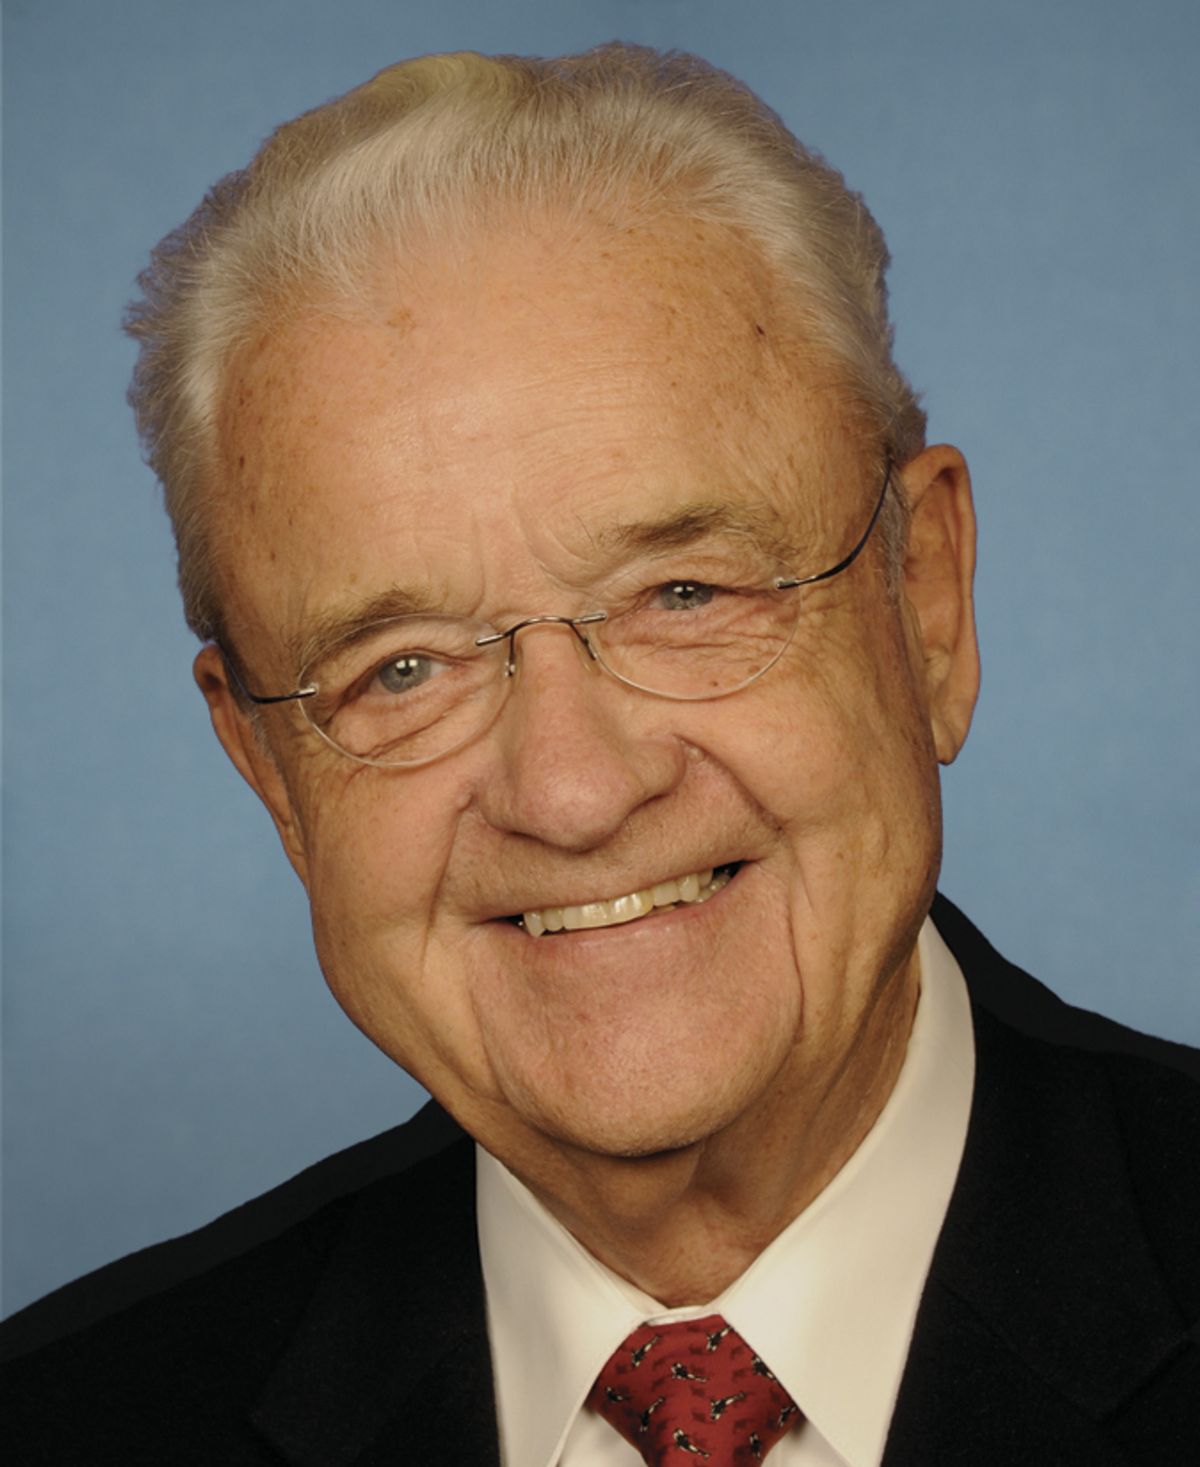 Rep. Leonard Boswell (D-Iowa)